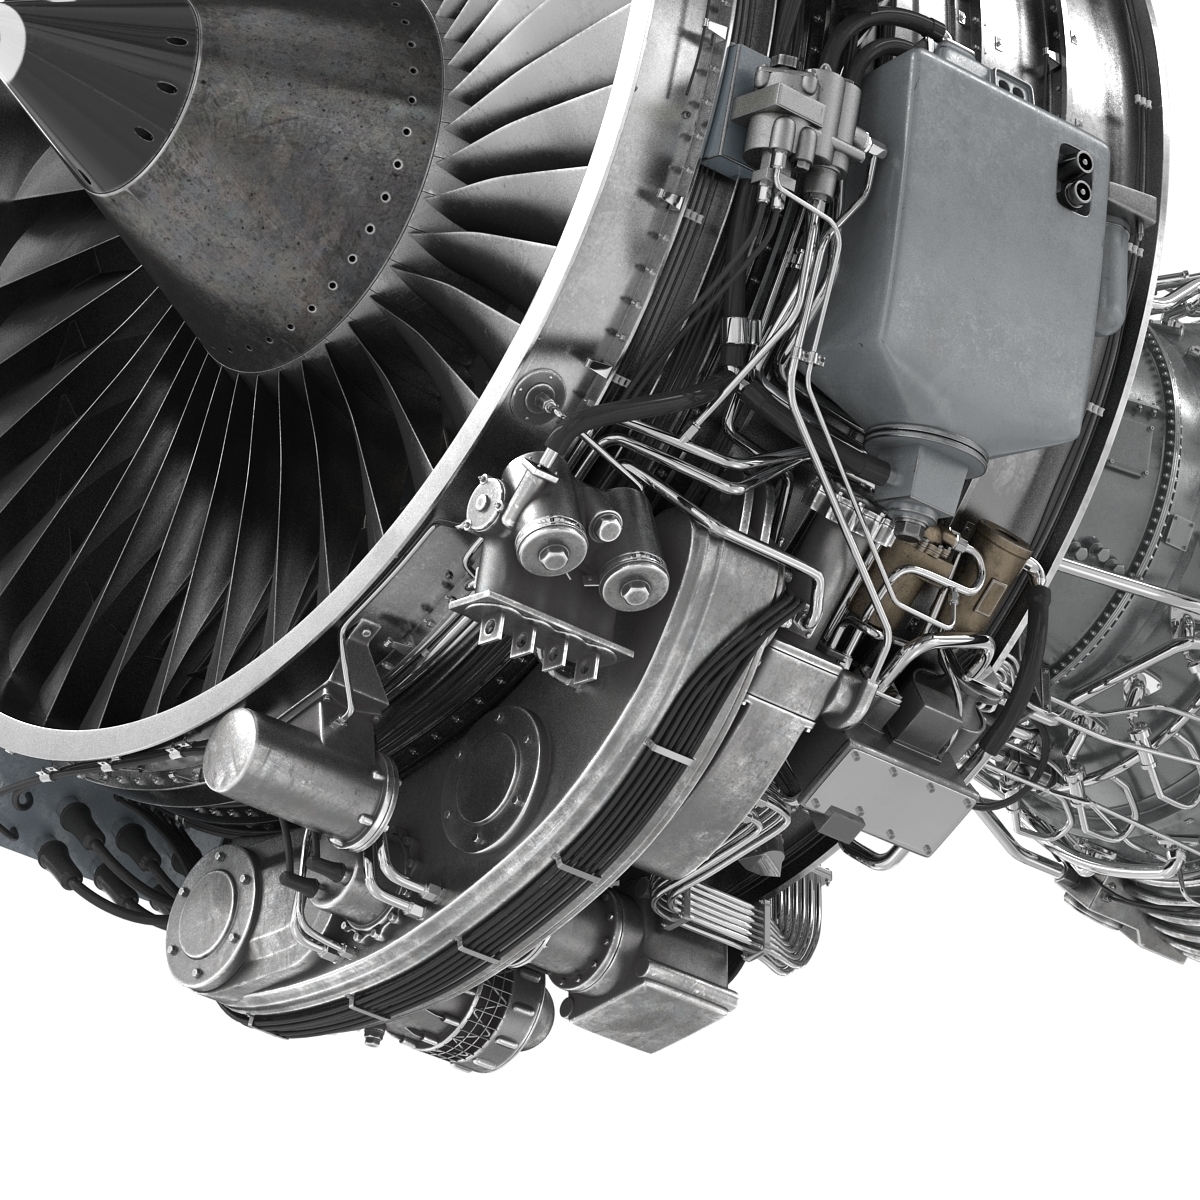 F119涡轮风扇发动机图片